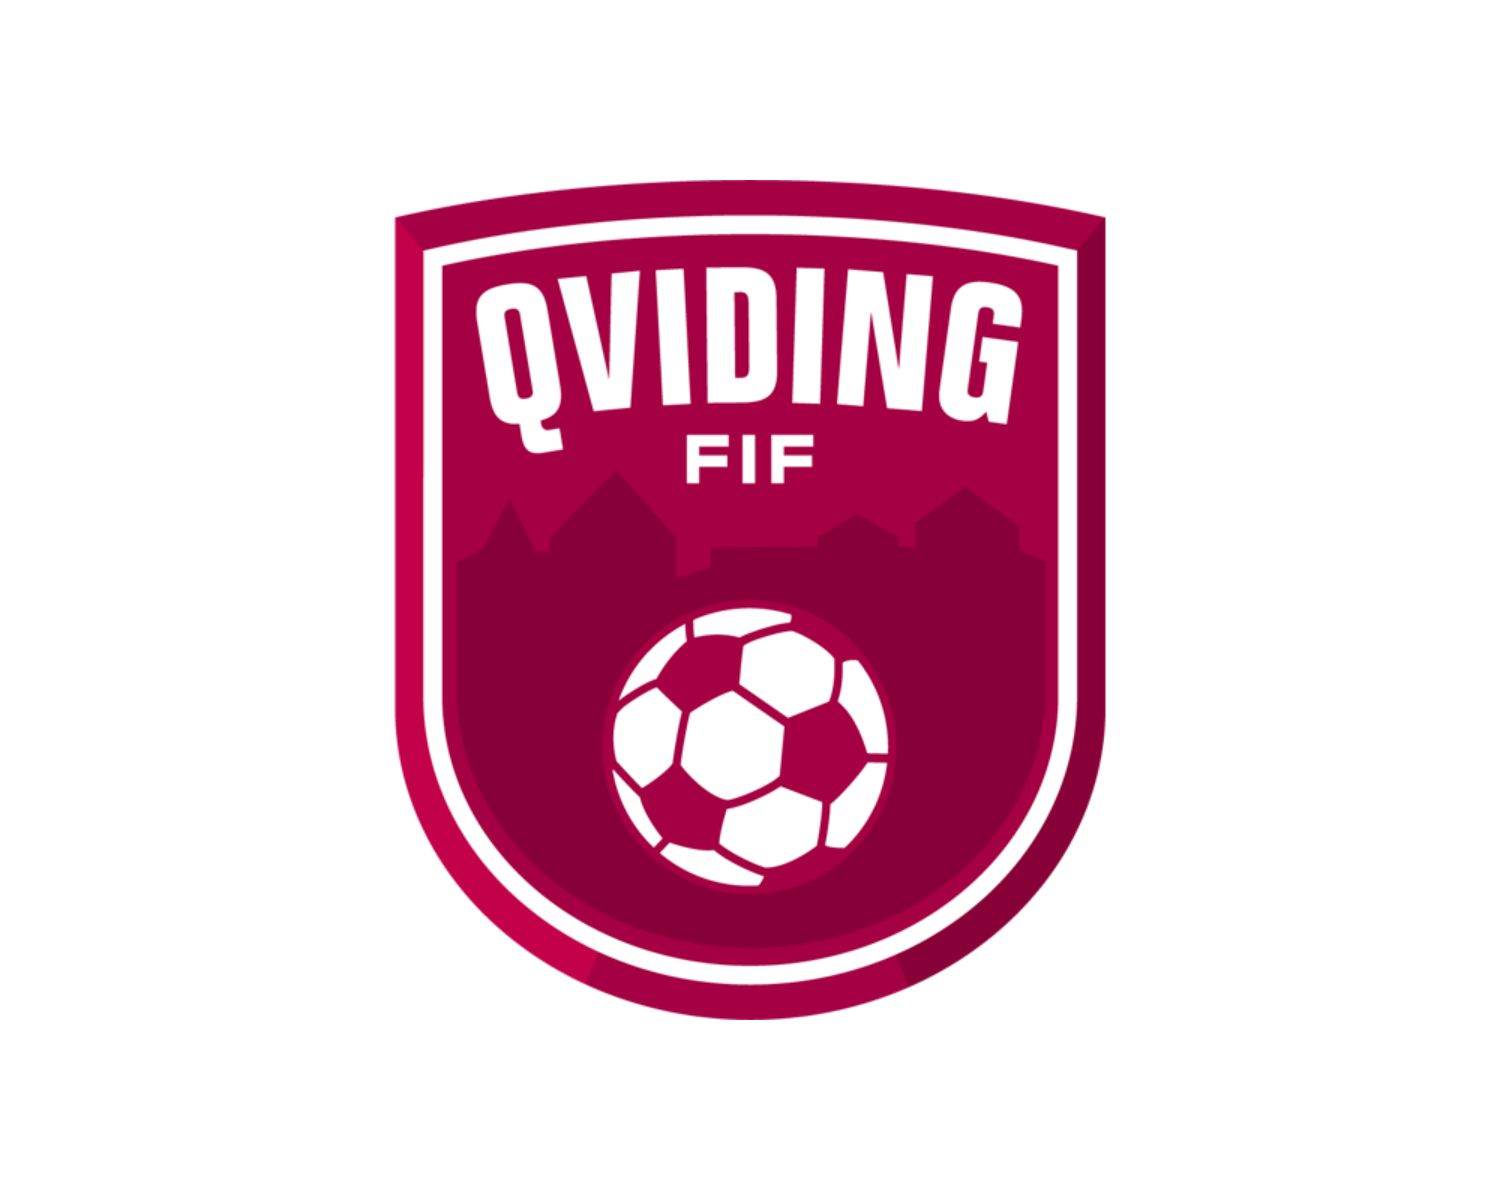 qviding-fif-14-football-club-facts